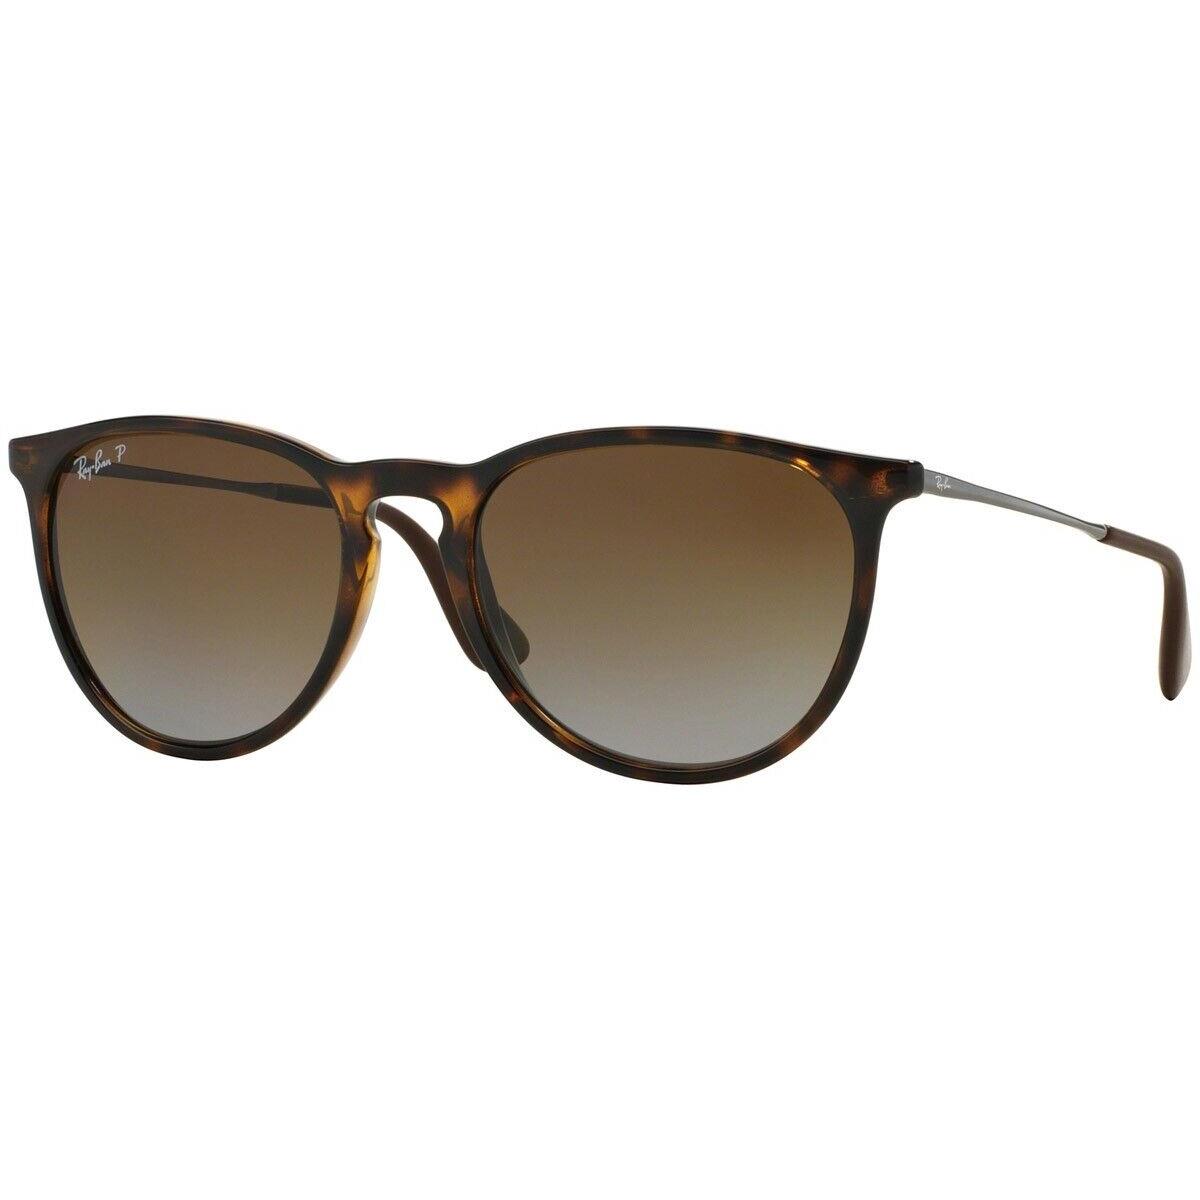 Ray-ban RB4171 710/T554 Erika Fashion Polarized Havana Brown Sunglasses